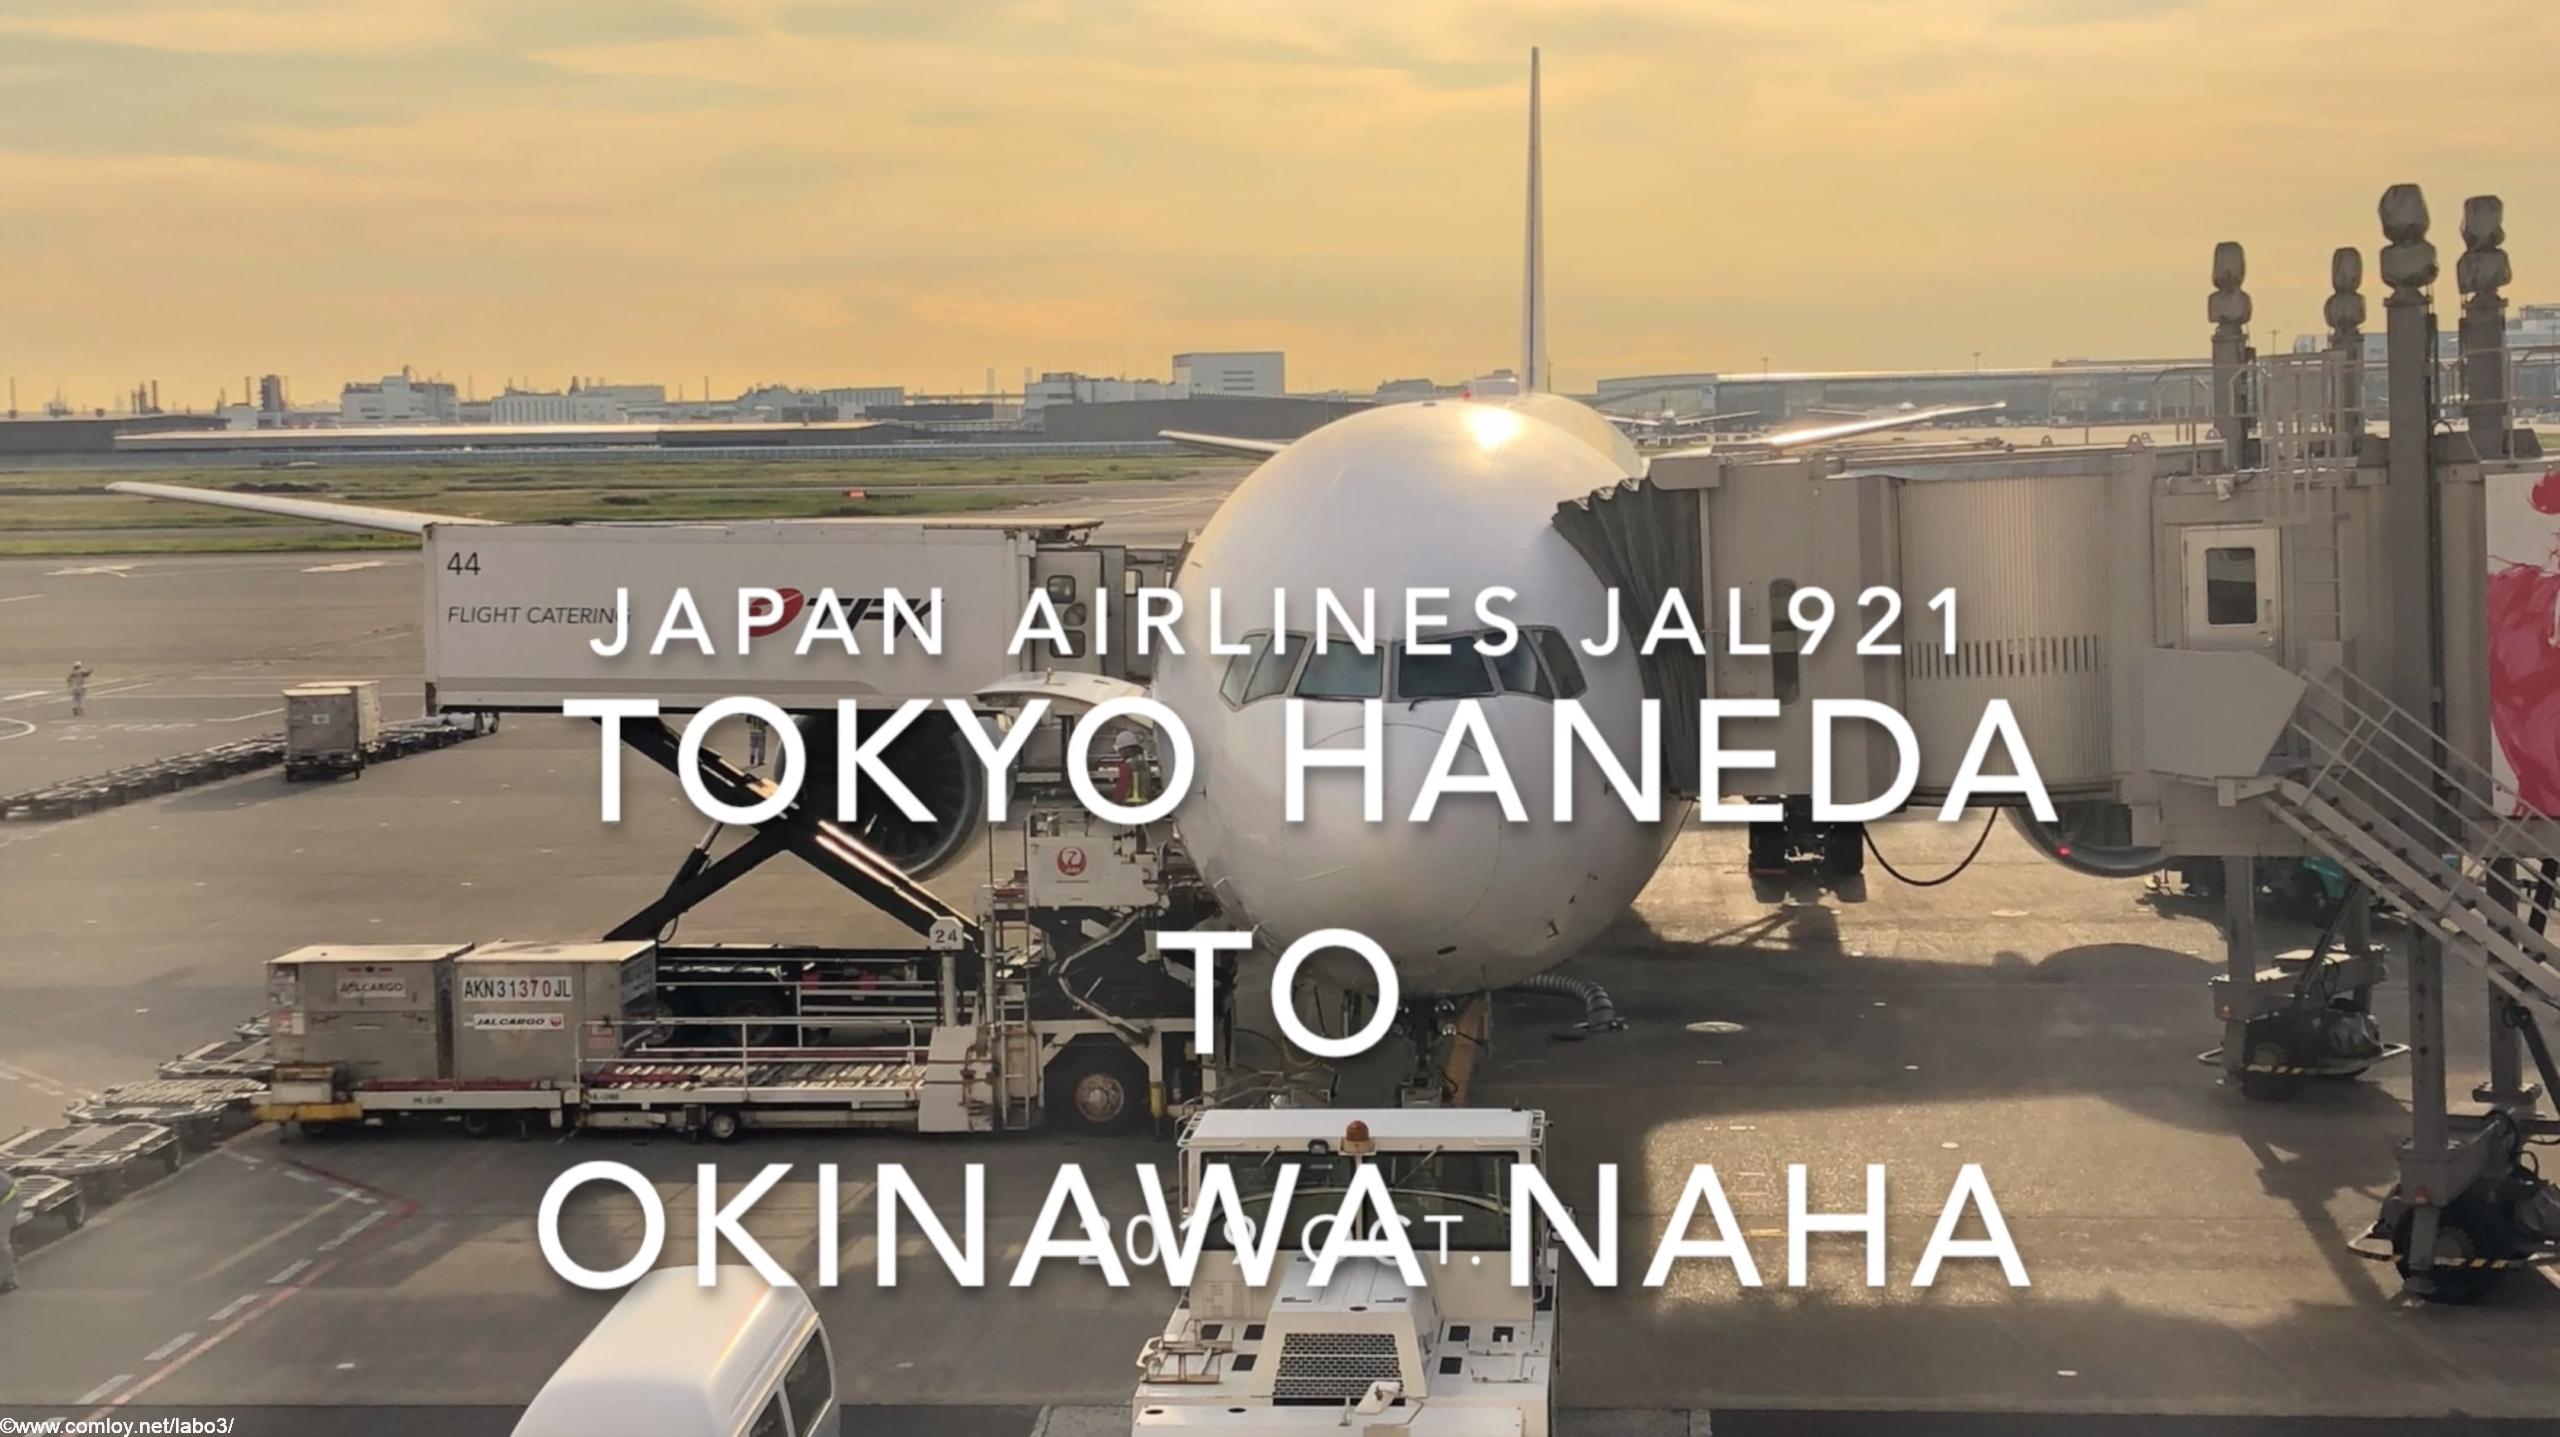 【Flight Report】2019 Oct Japan airlines JAL921 TOKYO HANEDA TO OKINAWA NAHA 日本航空 羽田 - 那覇 搭乗記